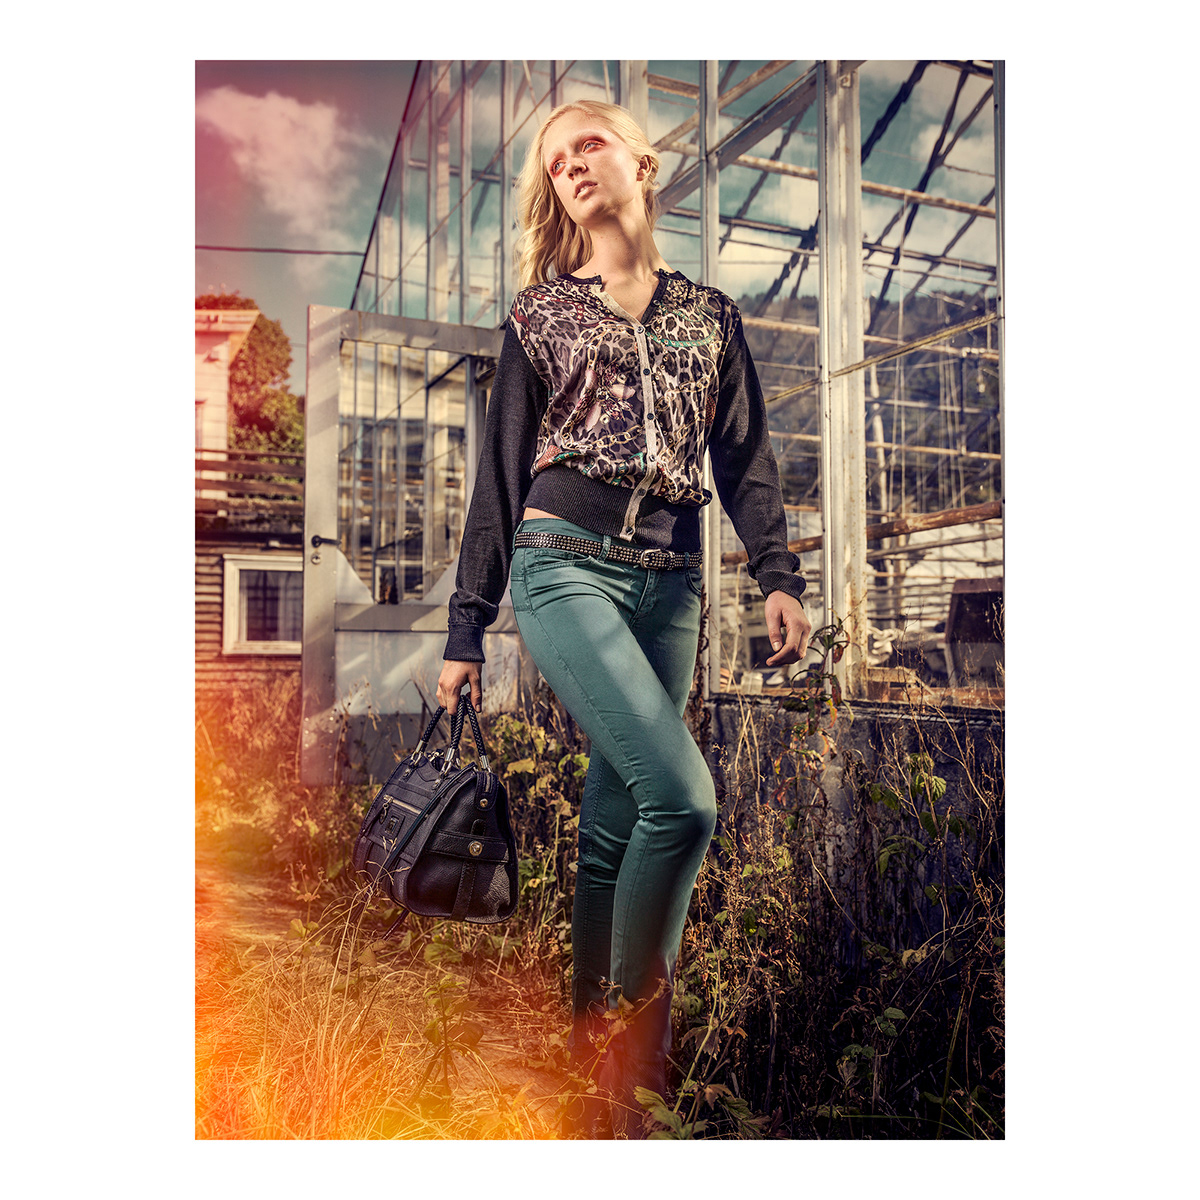 ad Hasselblad norway editorial bymagasinet ålesund models team boy girl autumn photoshoot behindthescenes retoush greenhouse